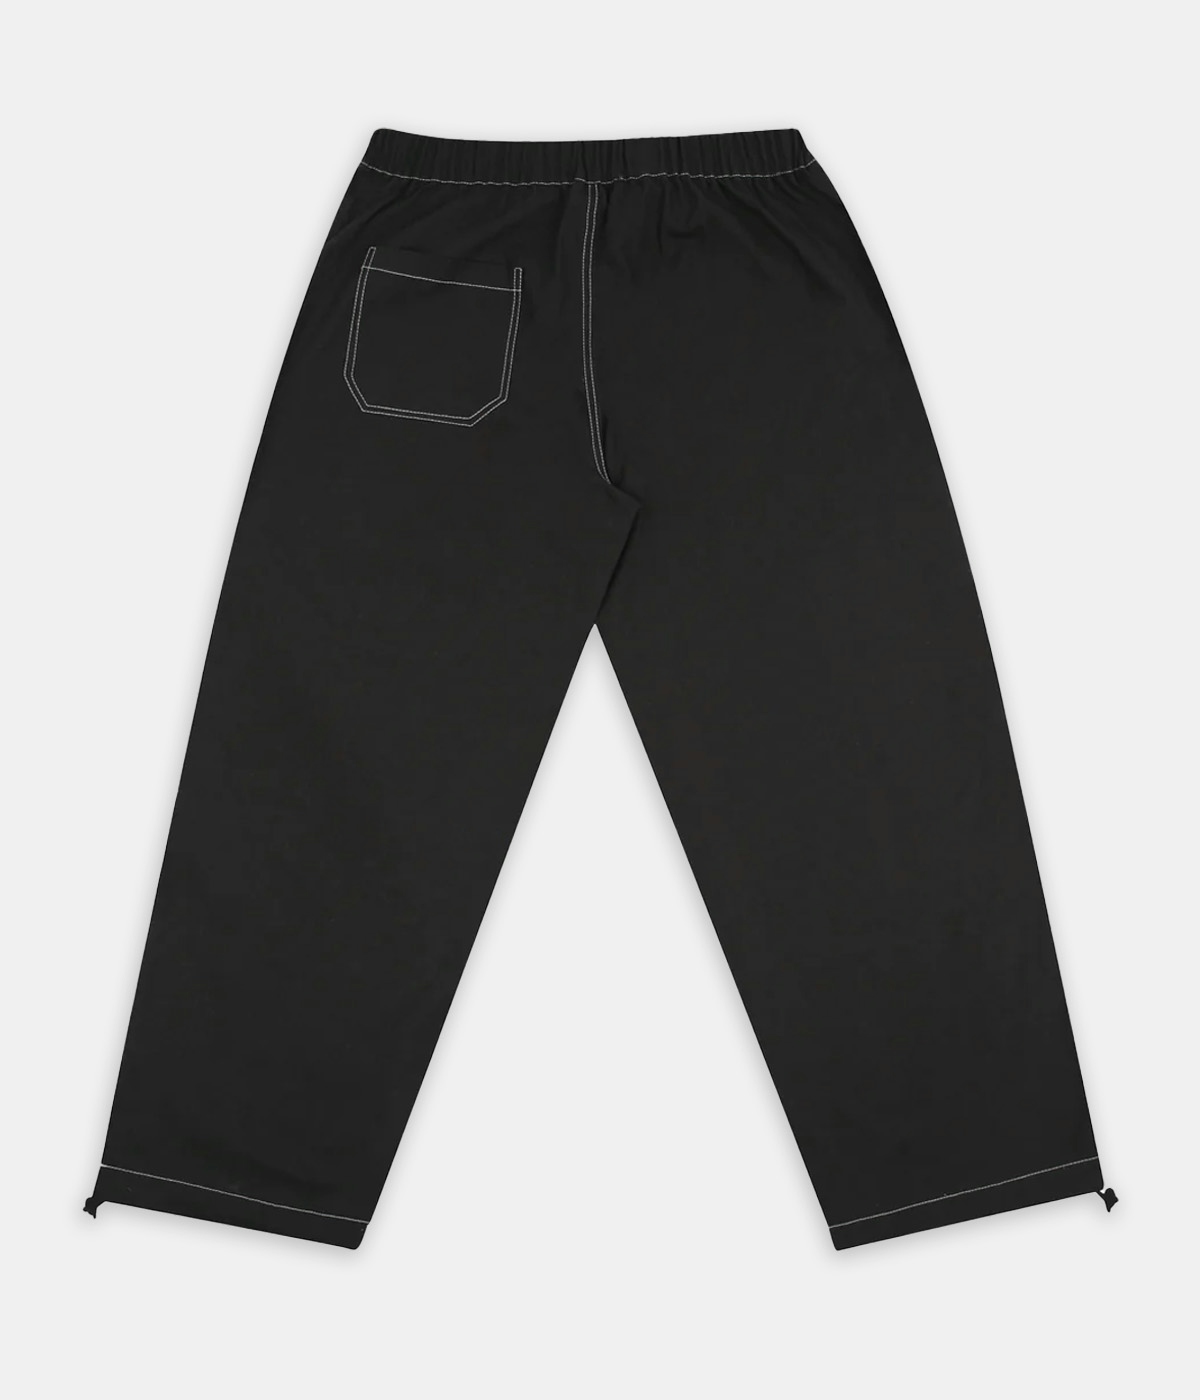 Yardsale Outdoor Pants Black 2